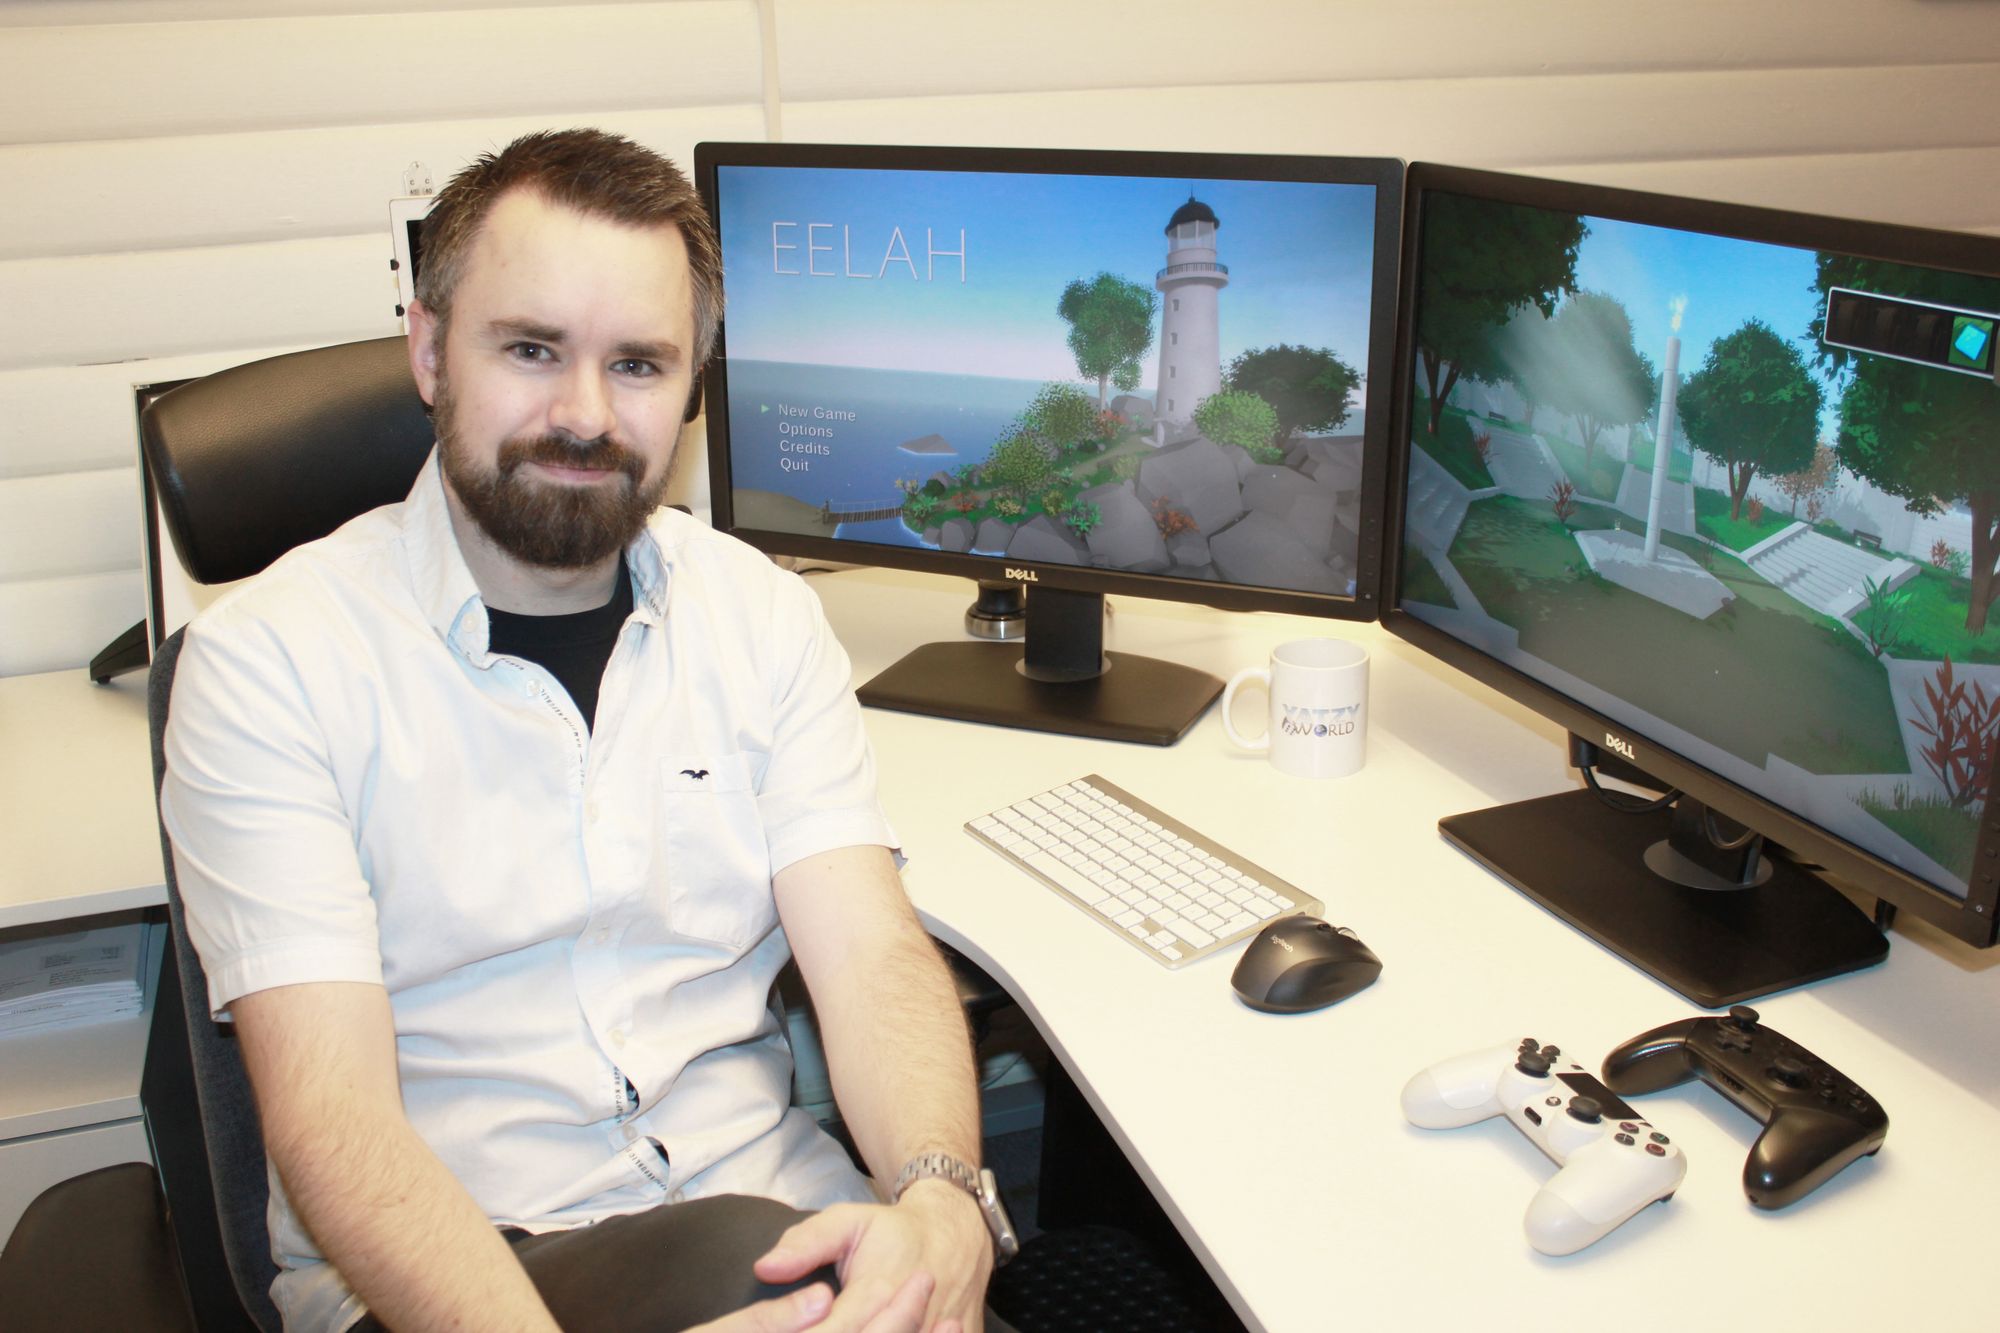 Interviewing Solo-Dev Mattias Simonsson on His New Game, Eelah